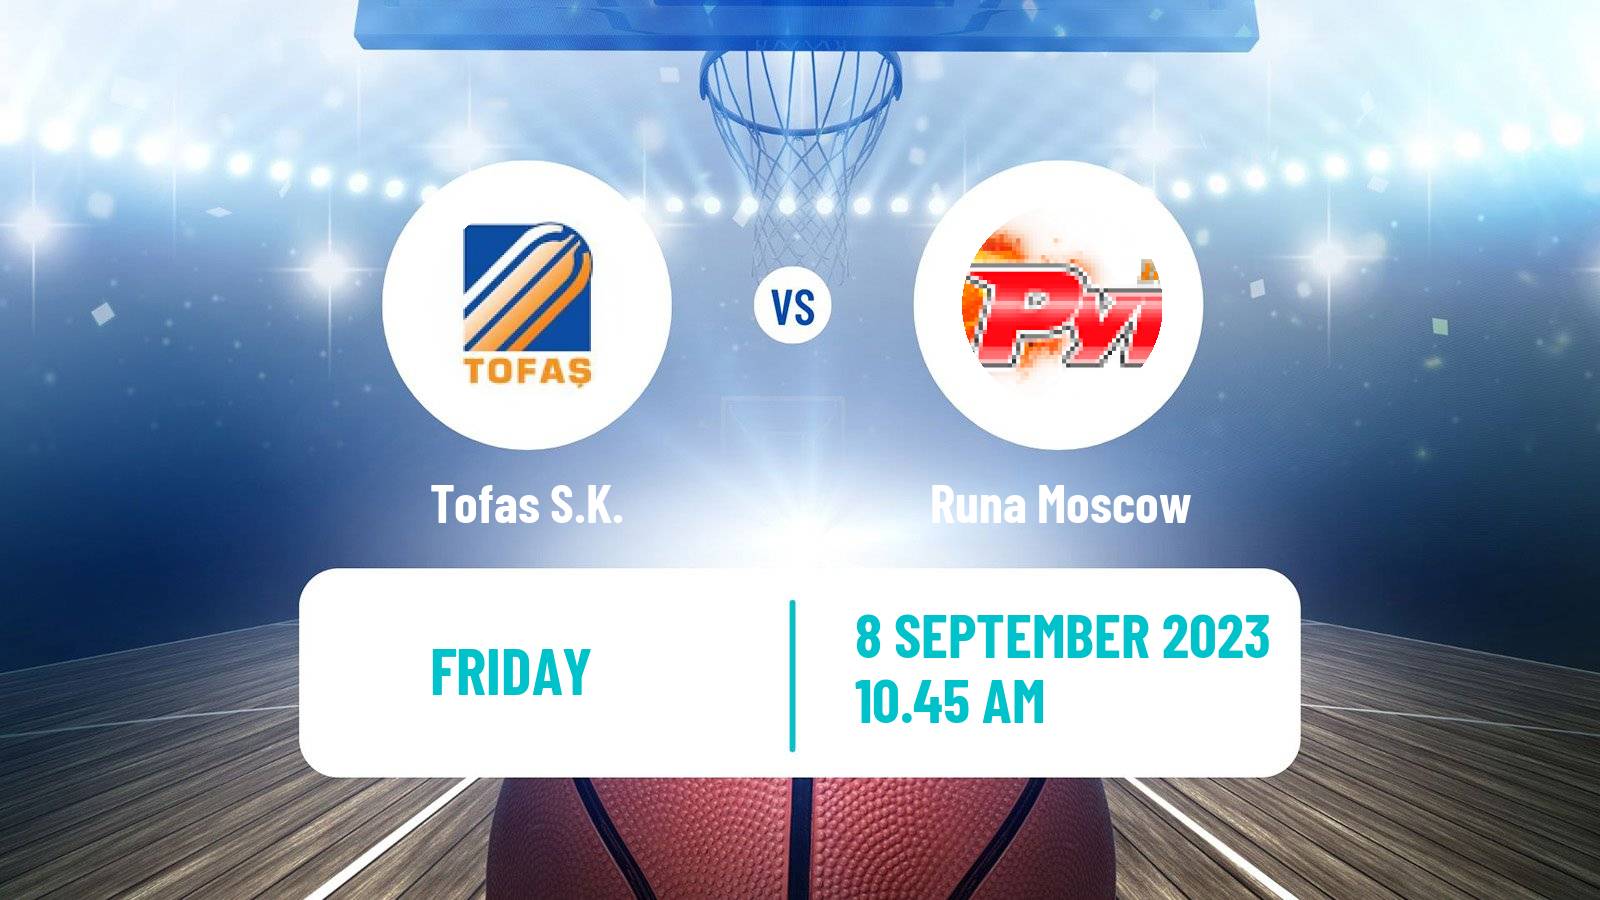 Basketball Club Friendly Basketball Tofaş - Runa Moscow